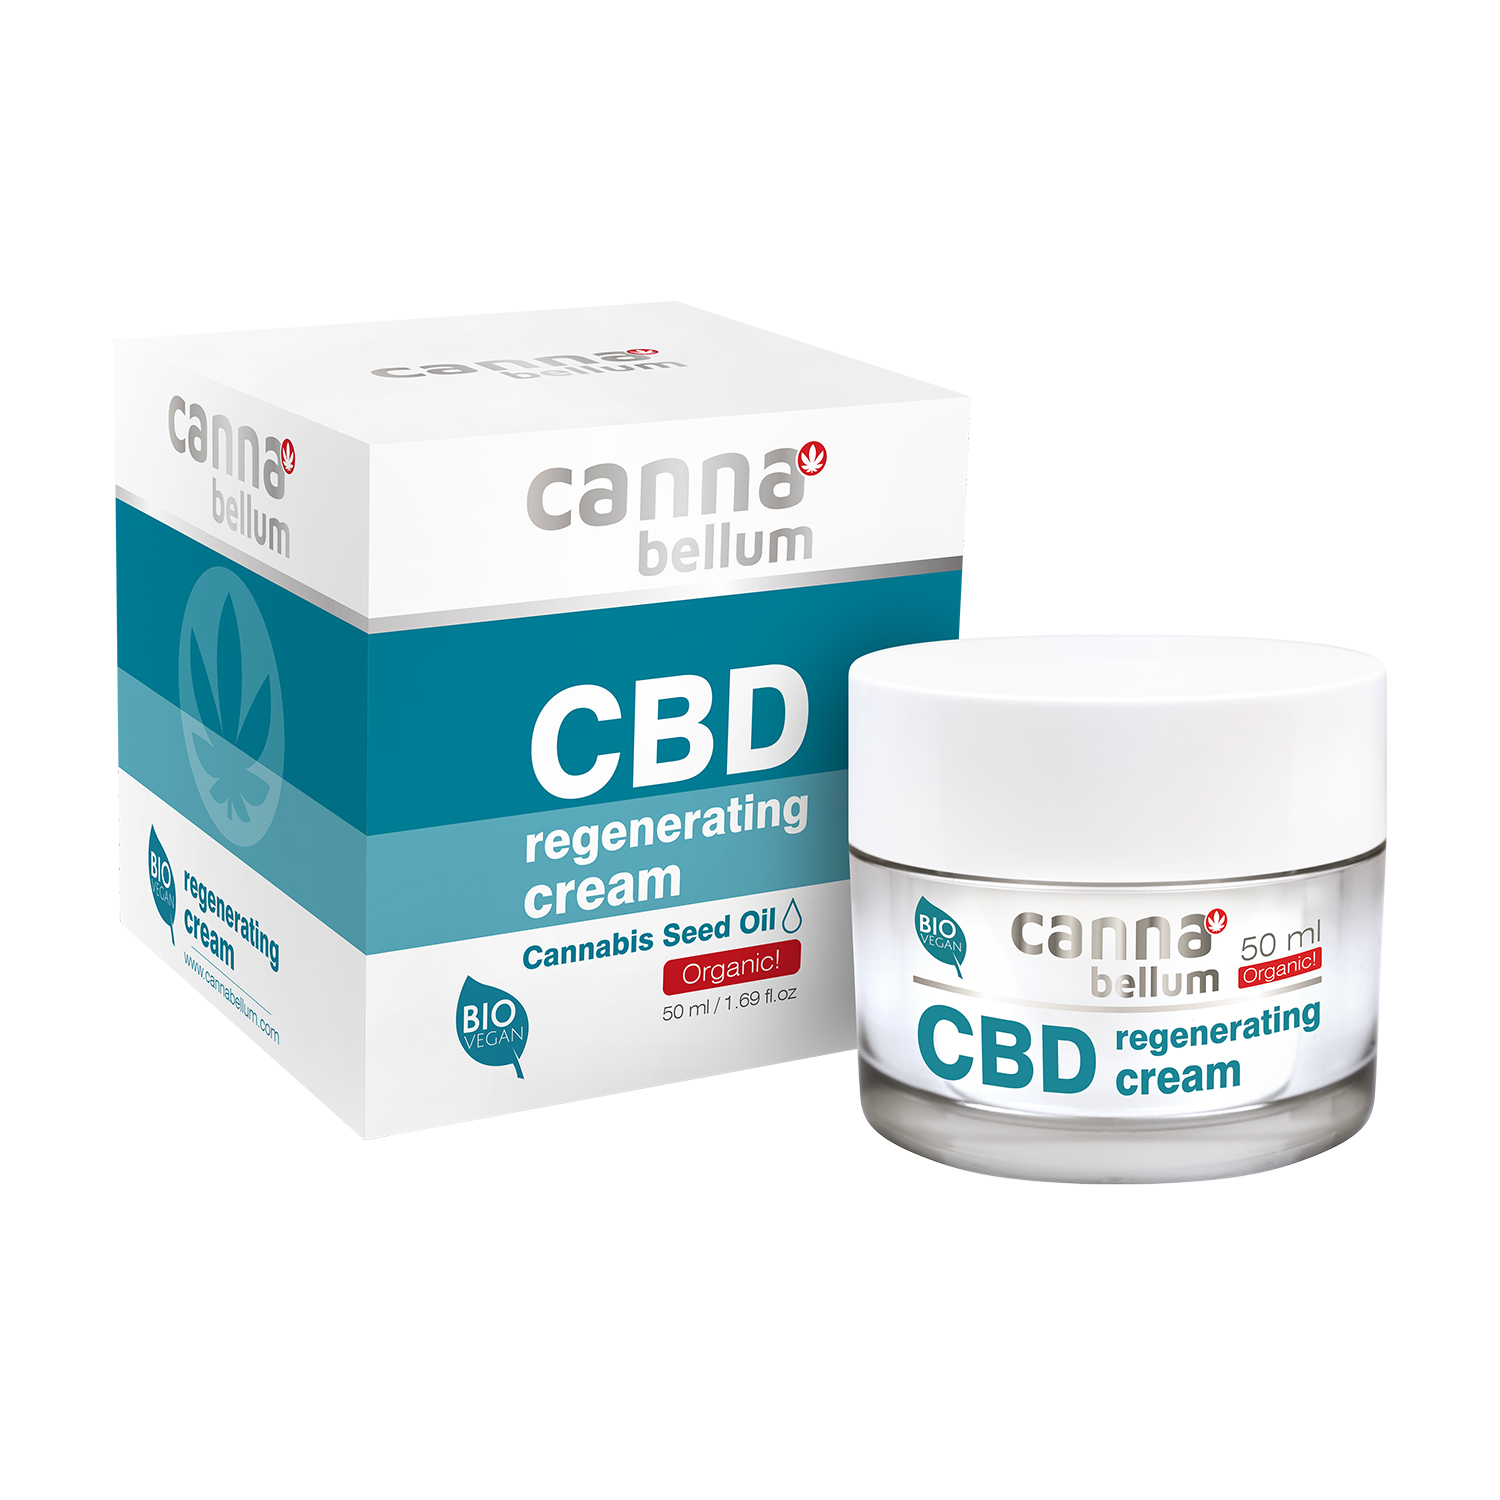 Cannabellum CBD regenerating cream 50ml P1253 komplet WEB 105